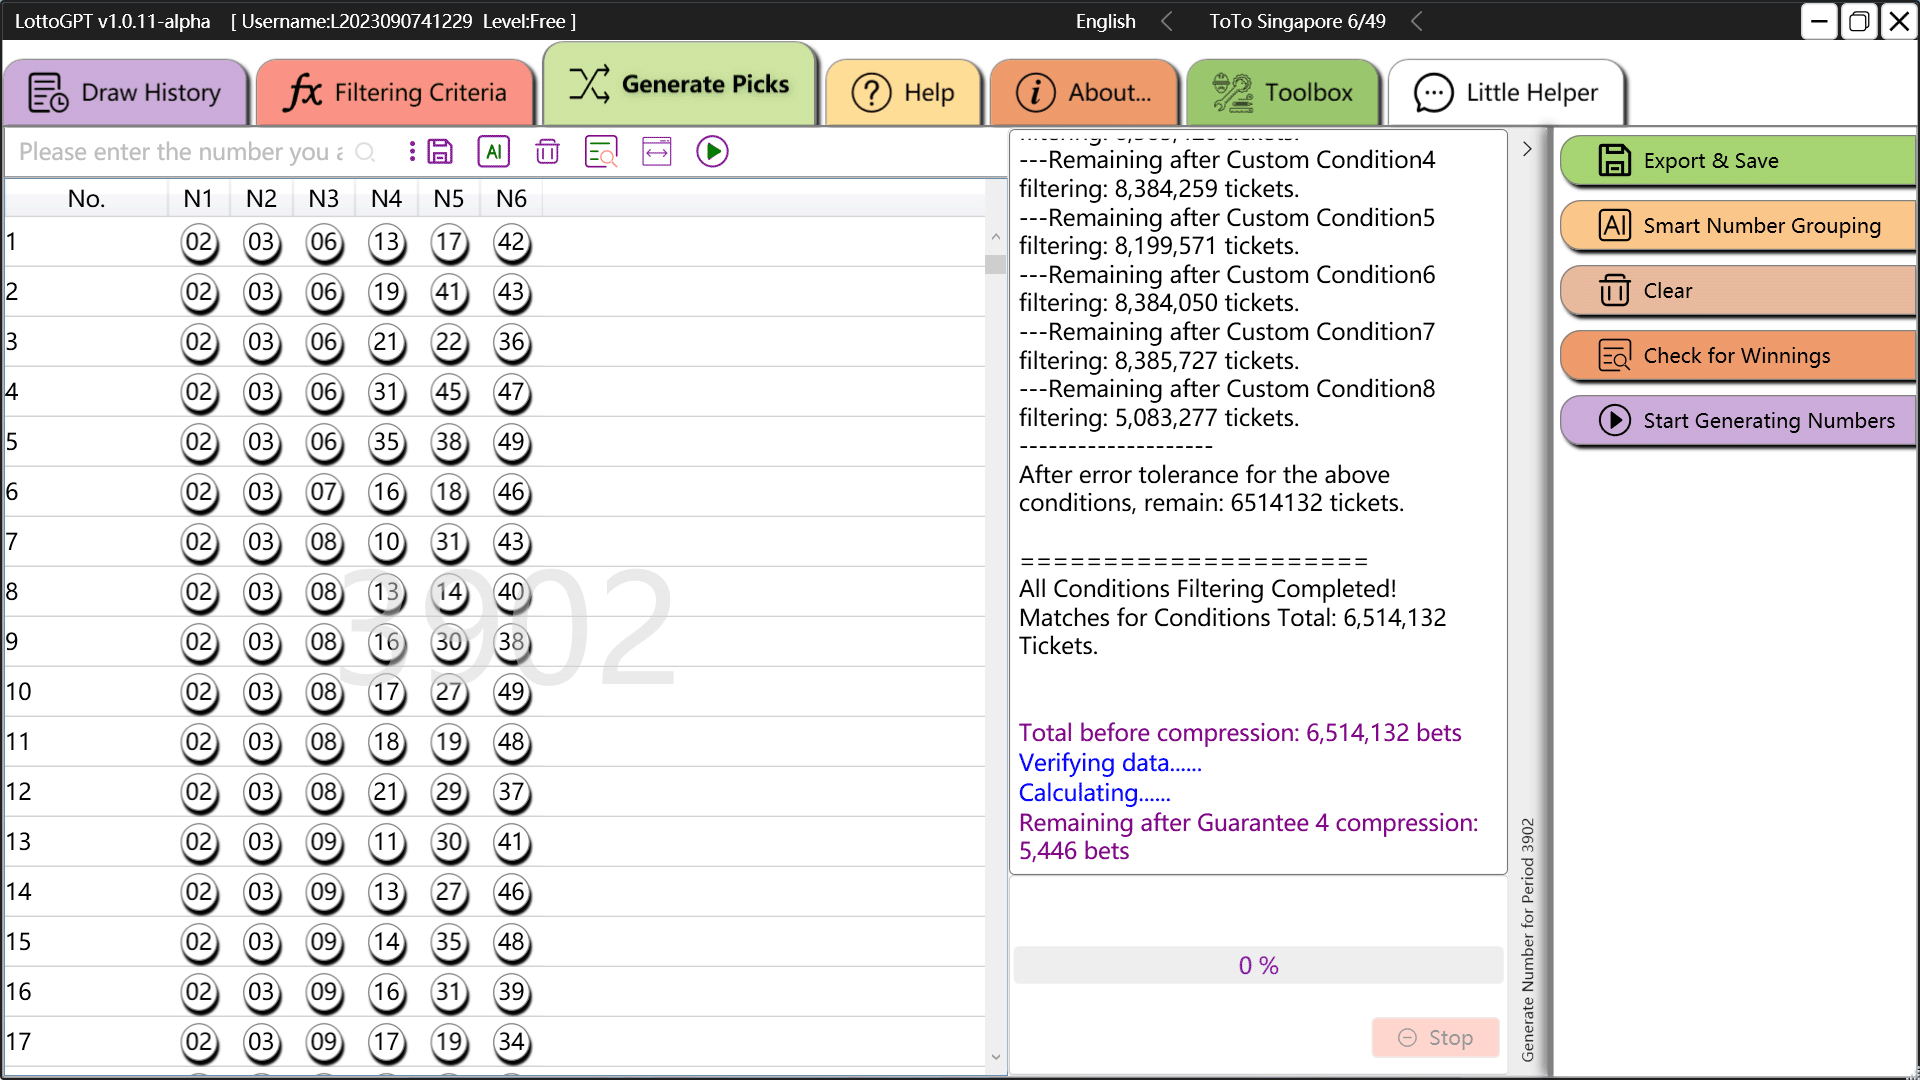 screenshot of lottoGPT interface 12